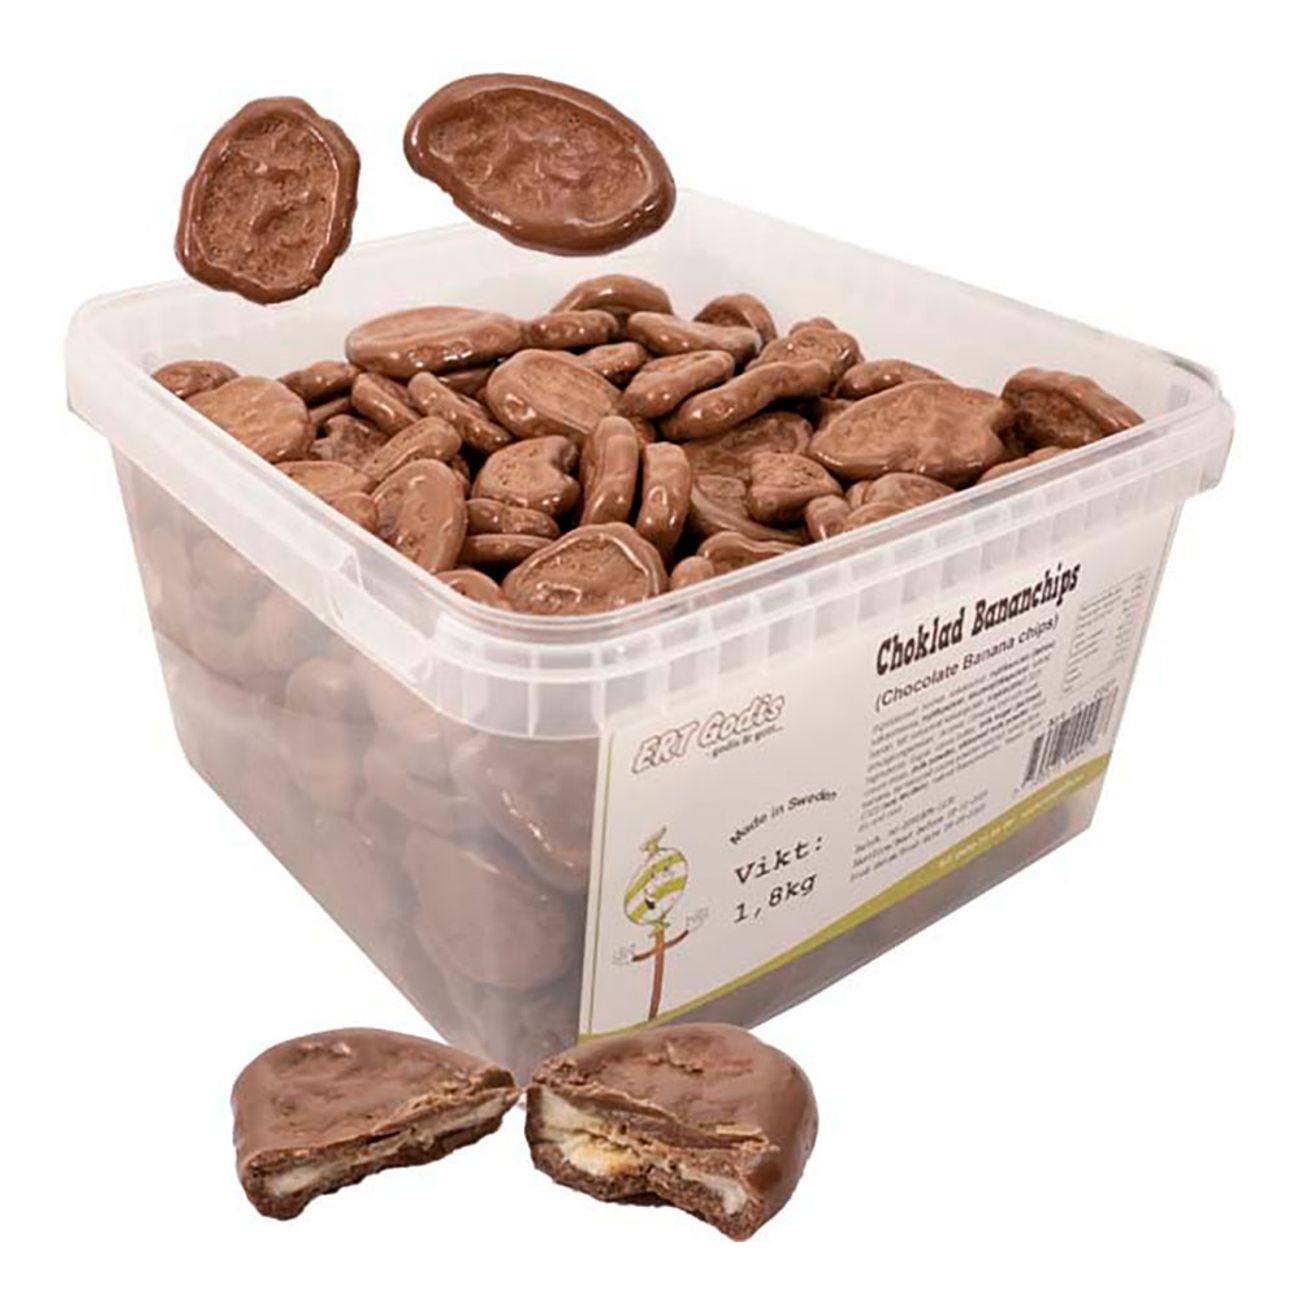 bananchips-choklad-storpack-83454-1